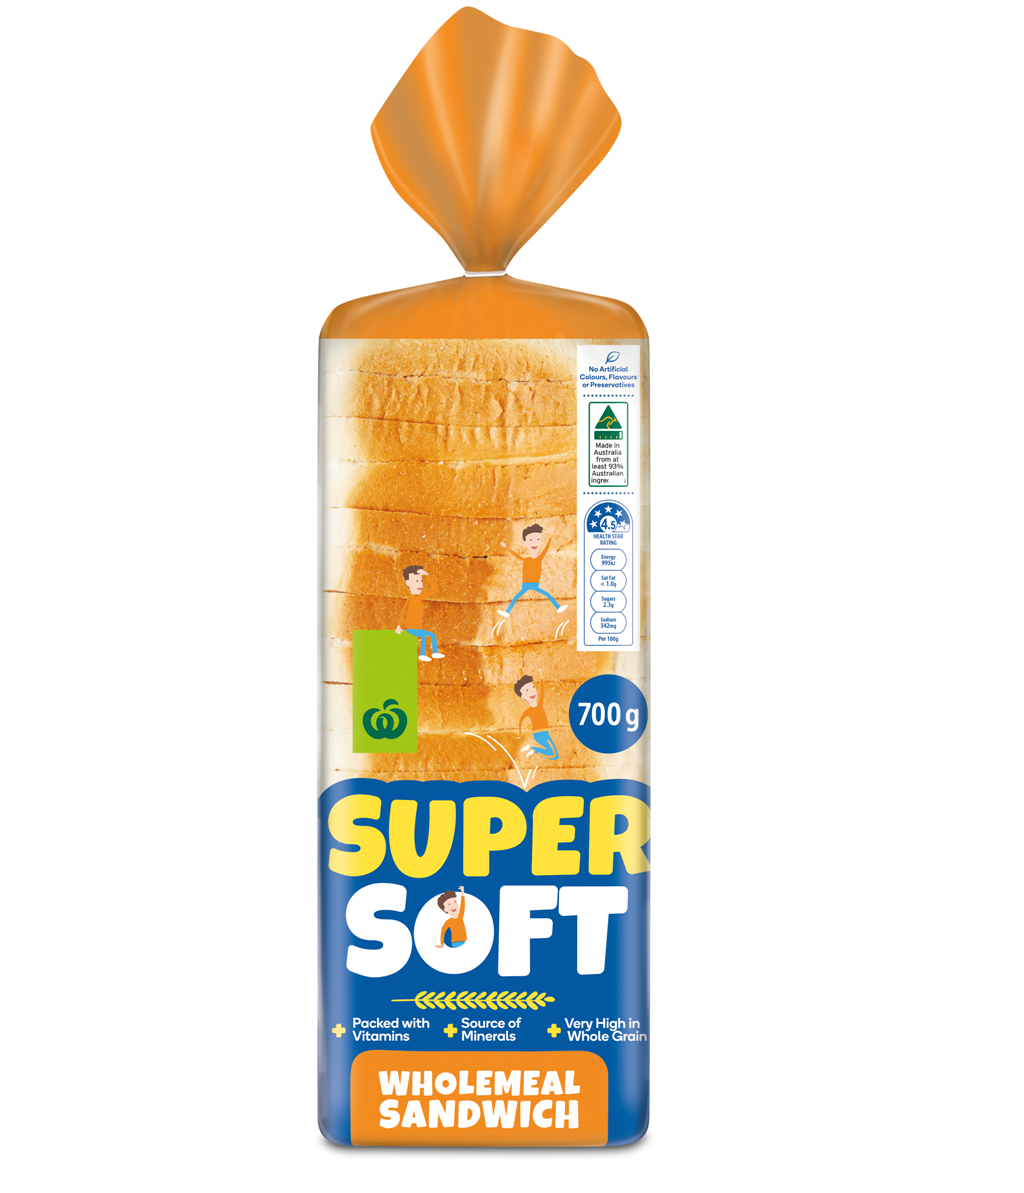 Super Soft Wholemeal Sandwich | Stay at Home Mum.com.au